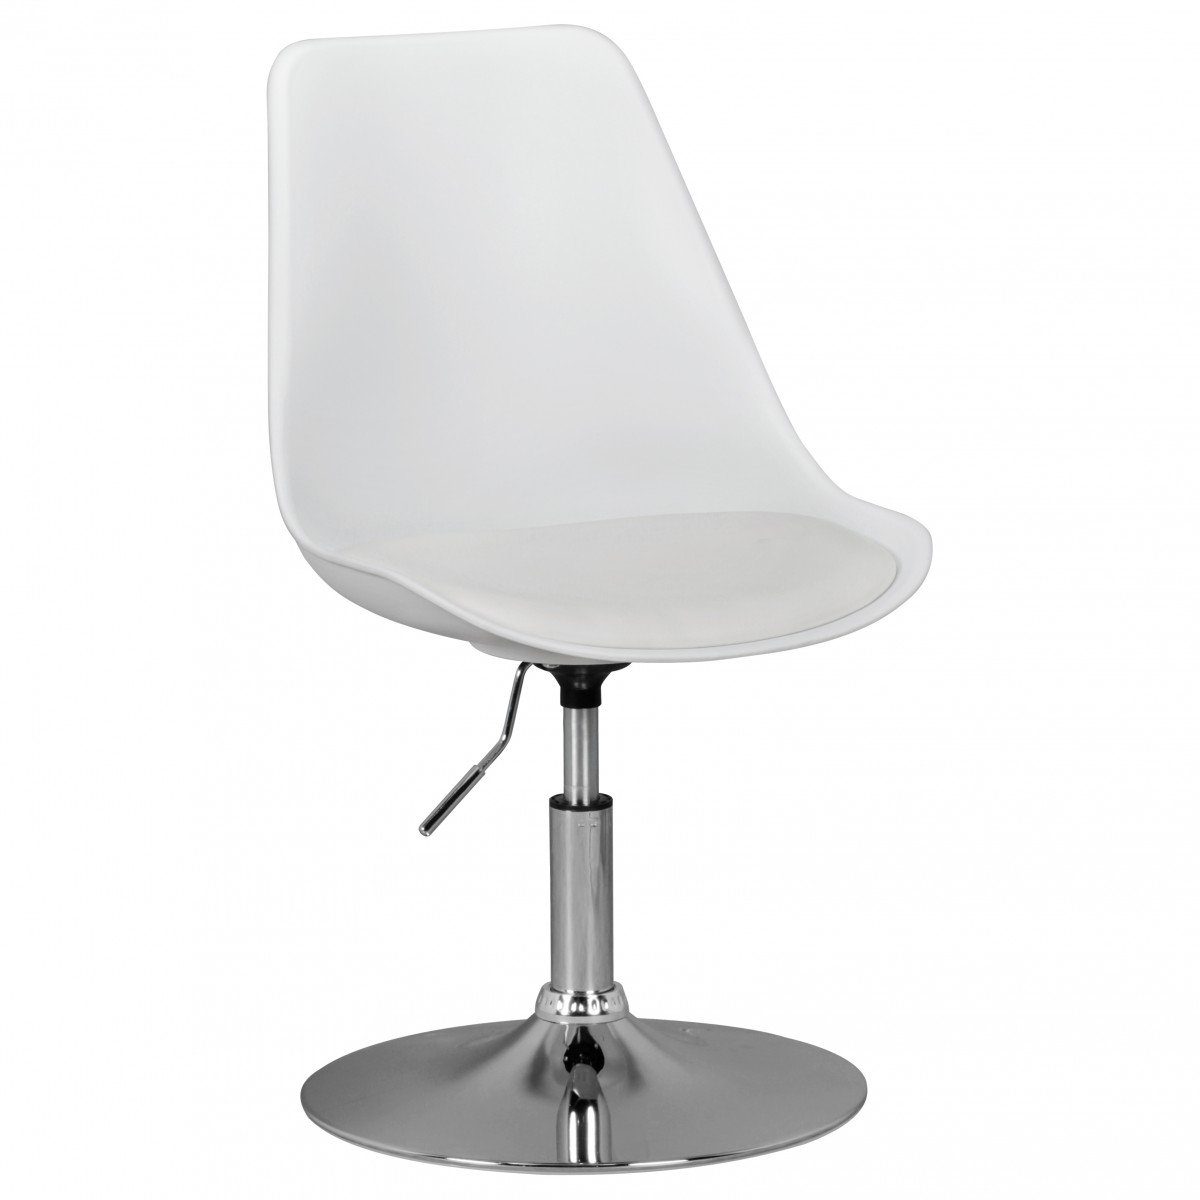 KADIMA DESIGN Besucherstuhl Trompetenstuhl mit Kunstlederbezug - Bequemer Büro-Stuhl